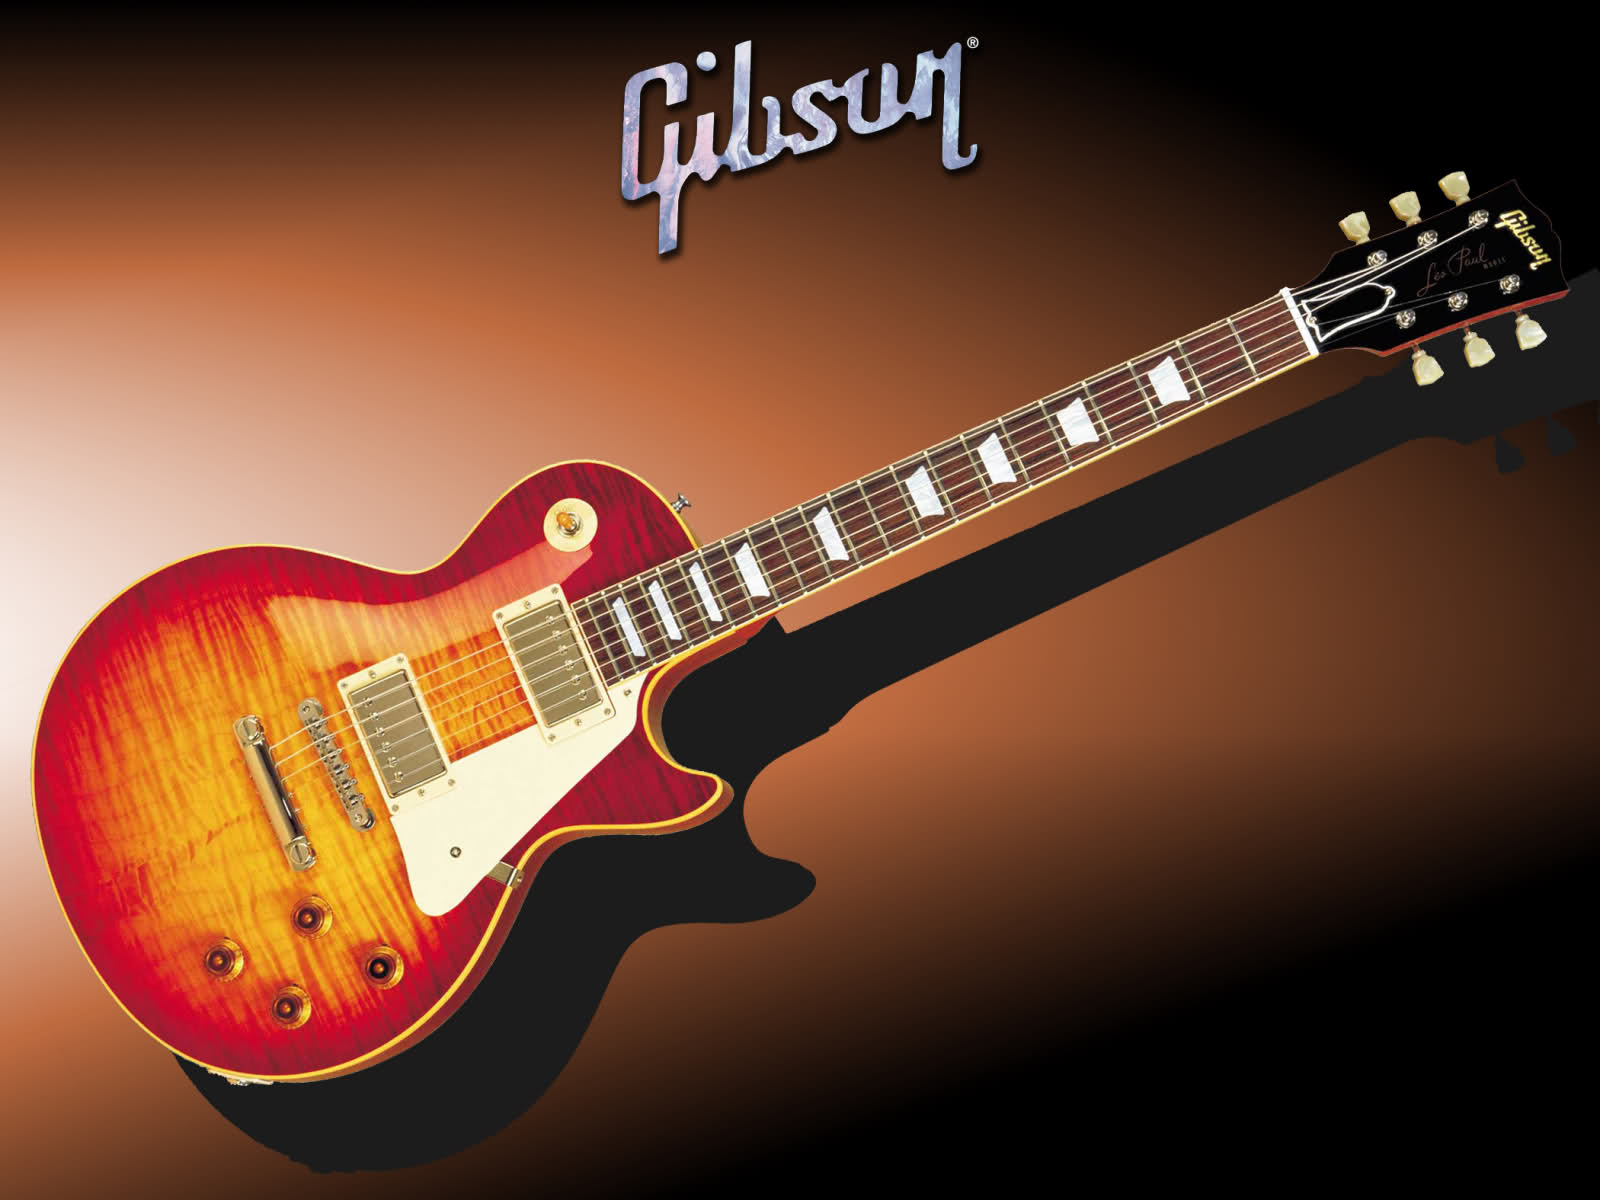 Gibson Guitar Wallpaper Search Results Newdesktopwallpaper Info